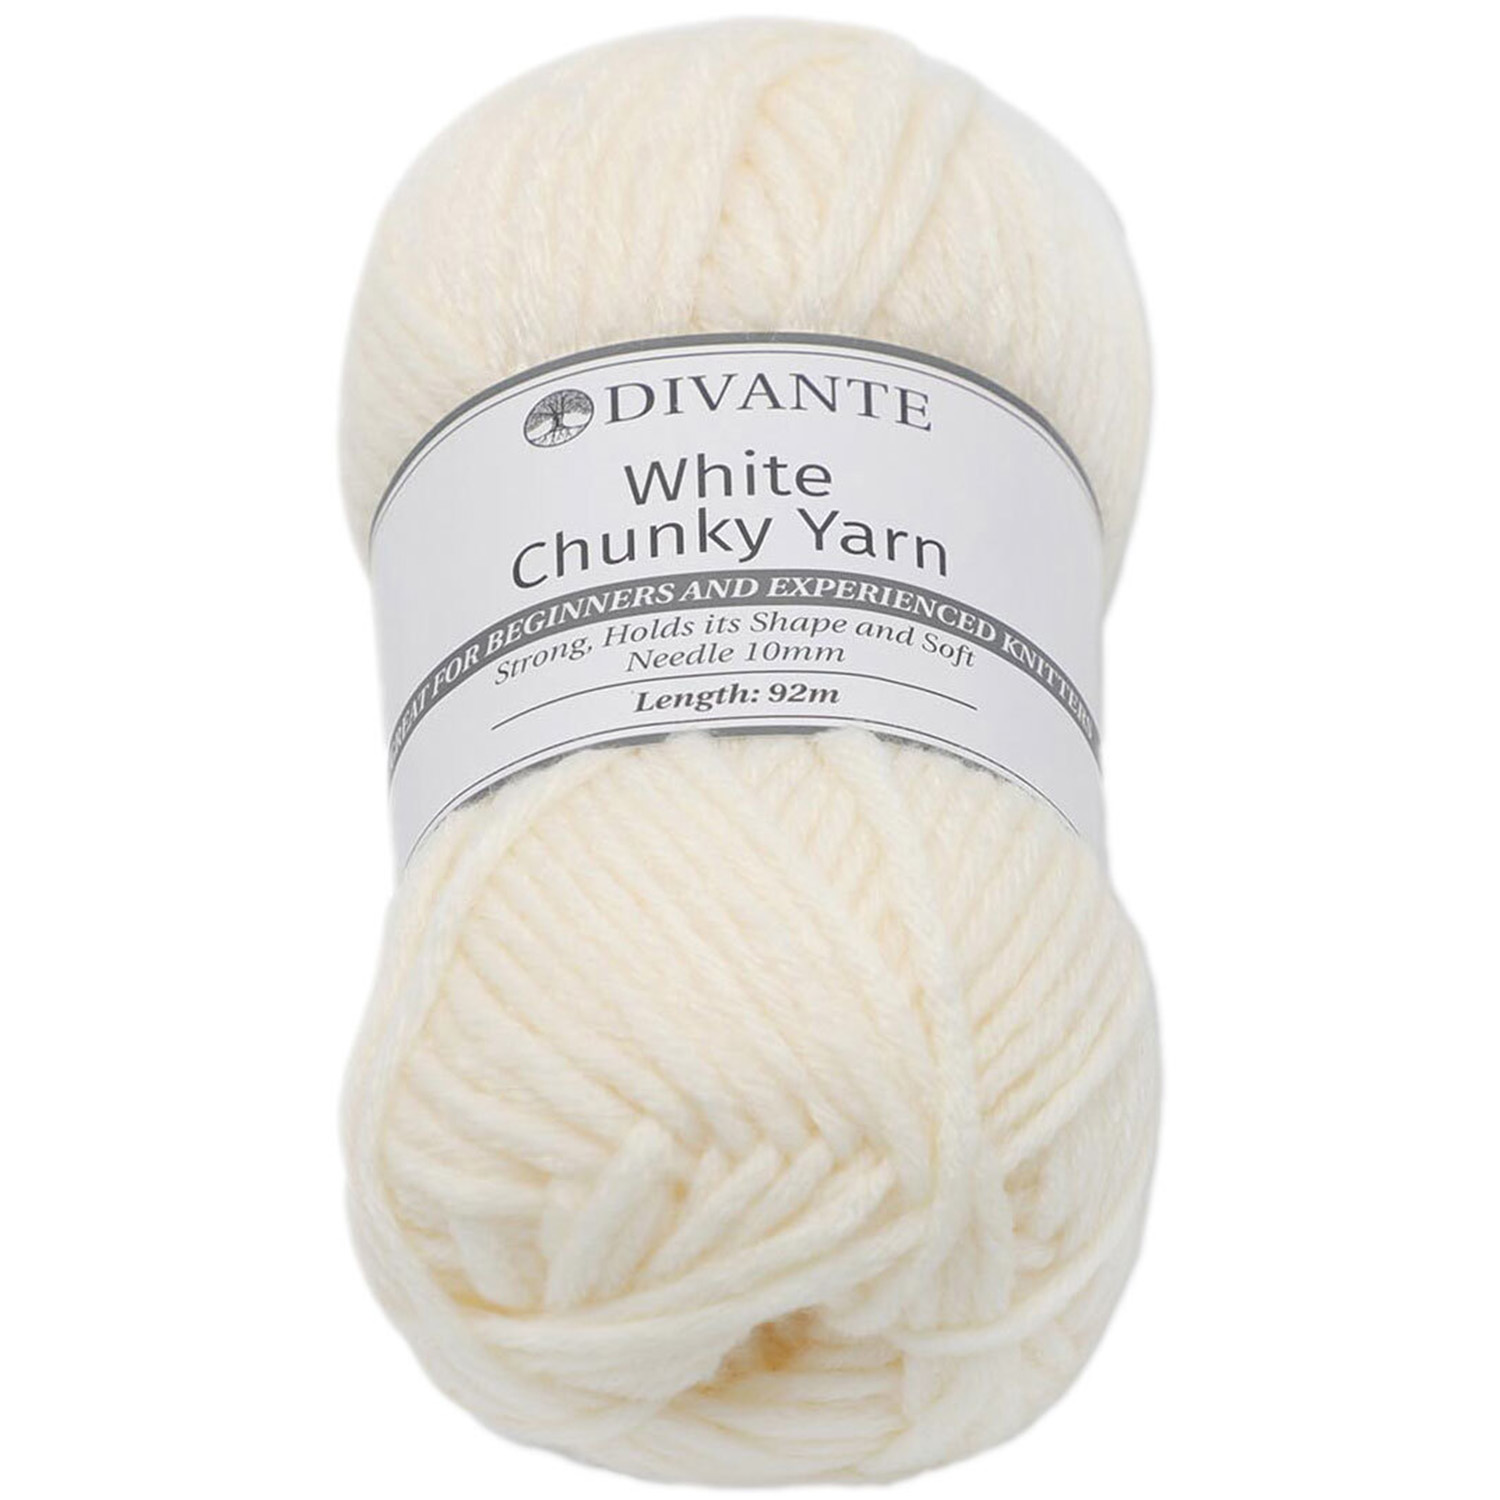 Divante White Chunky Yarn 92m Image